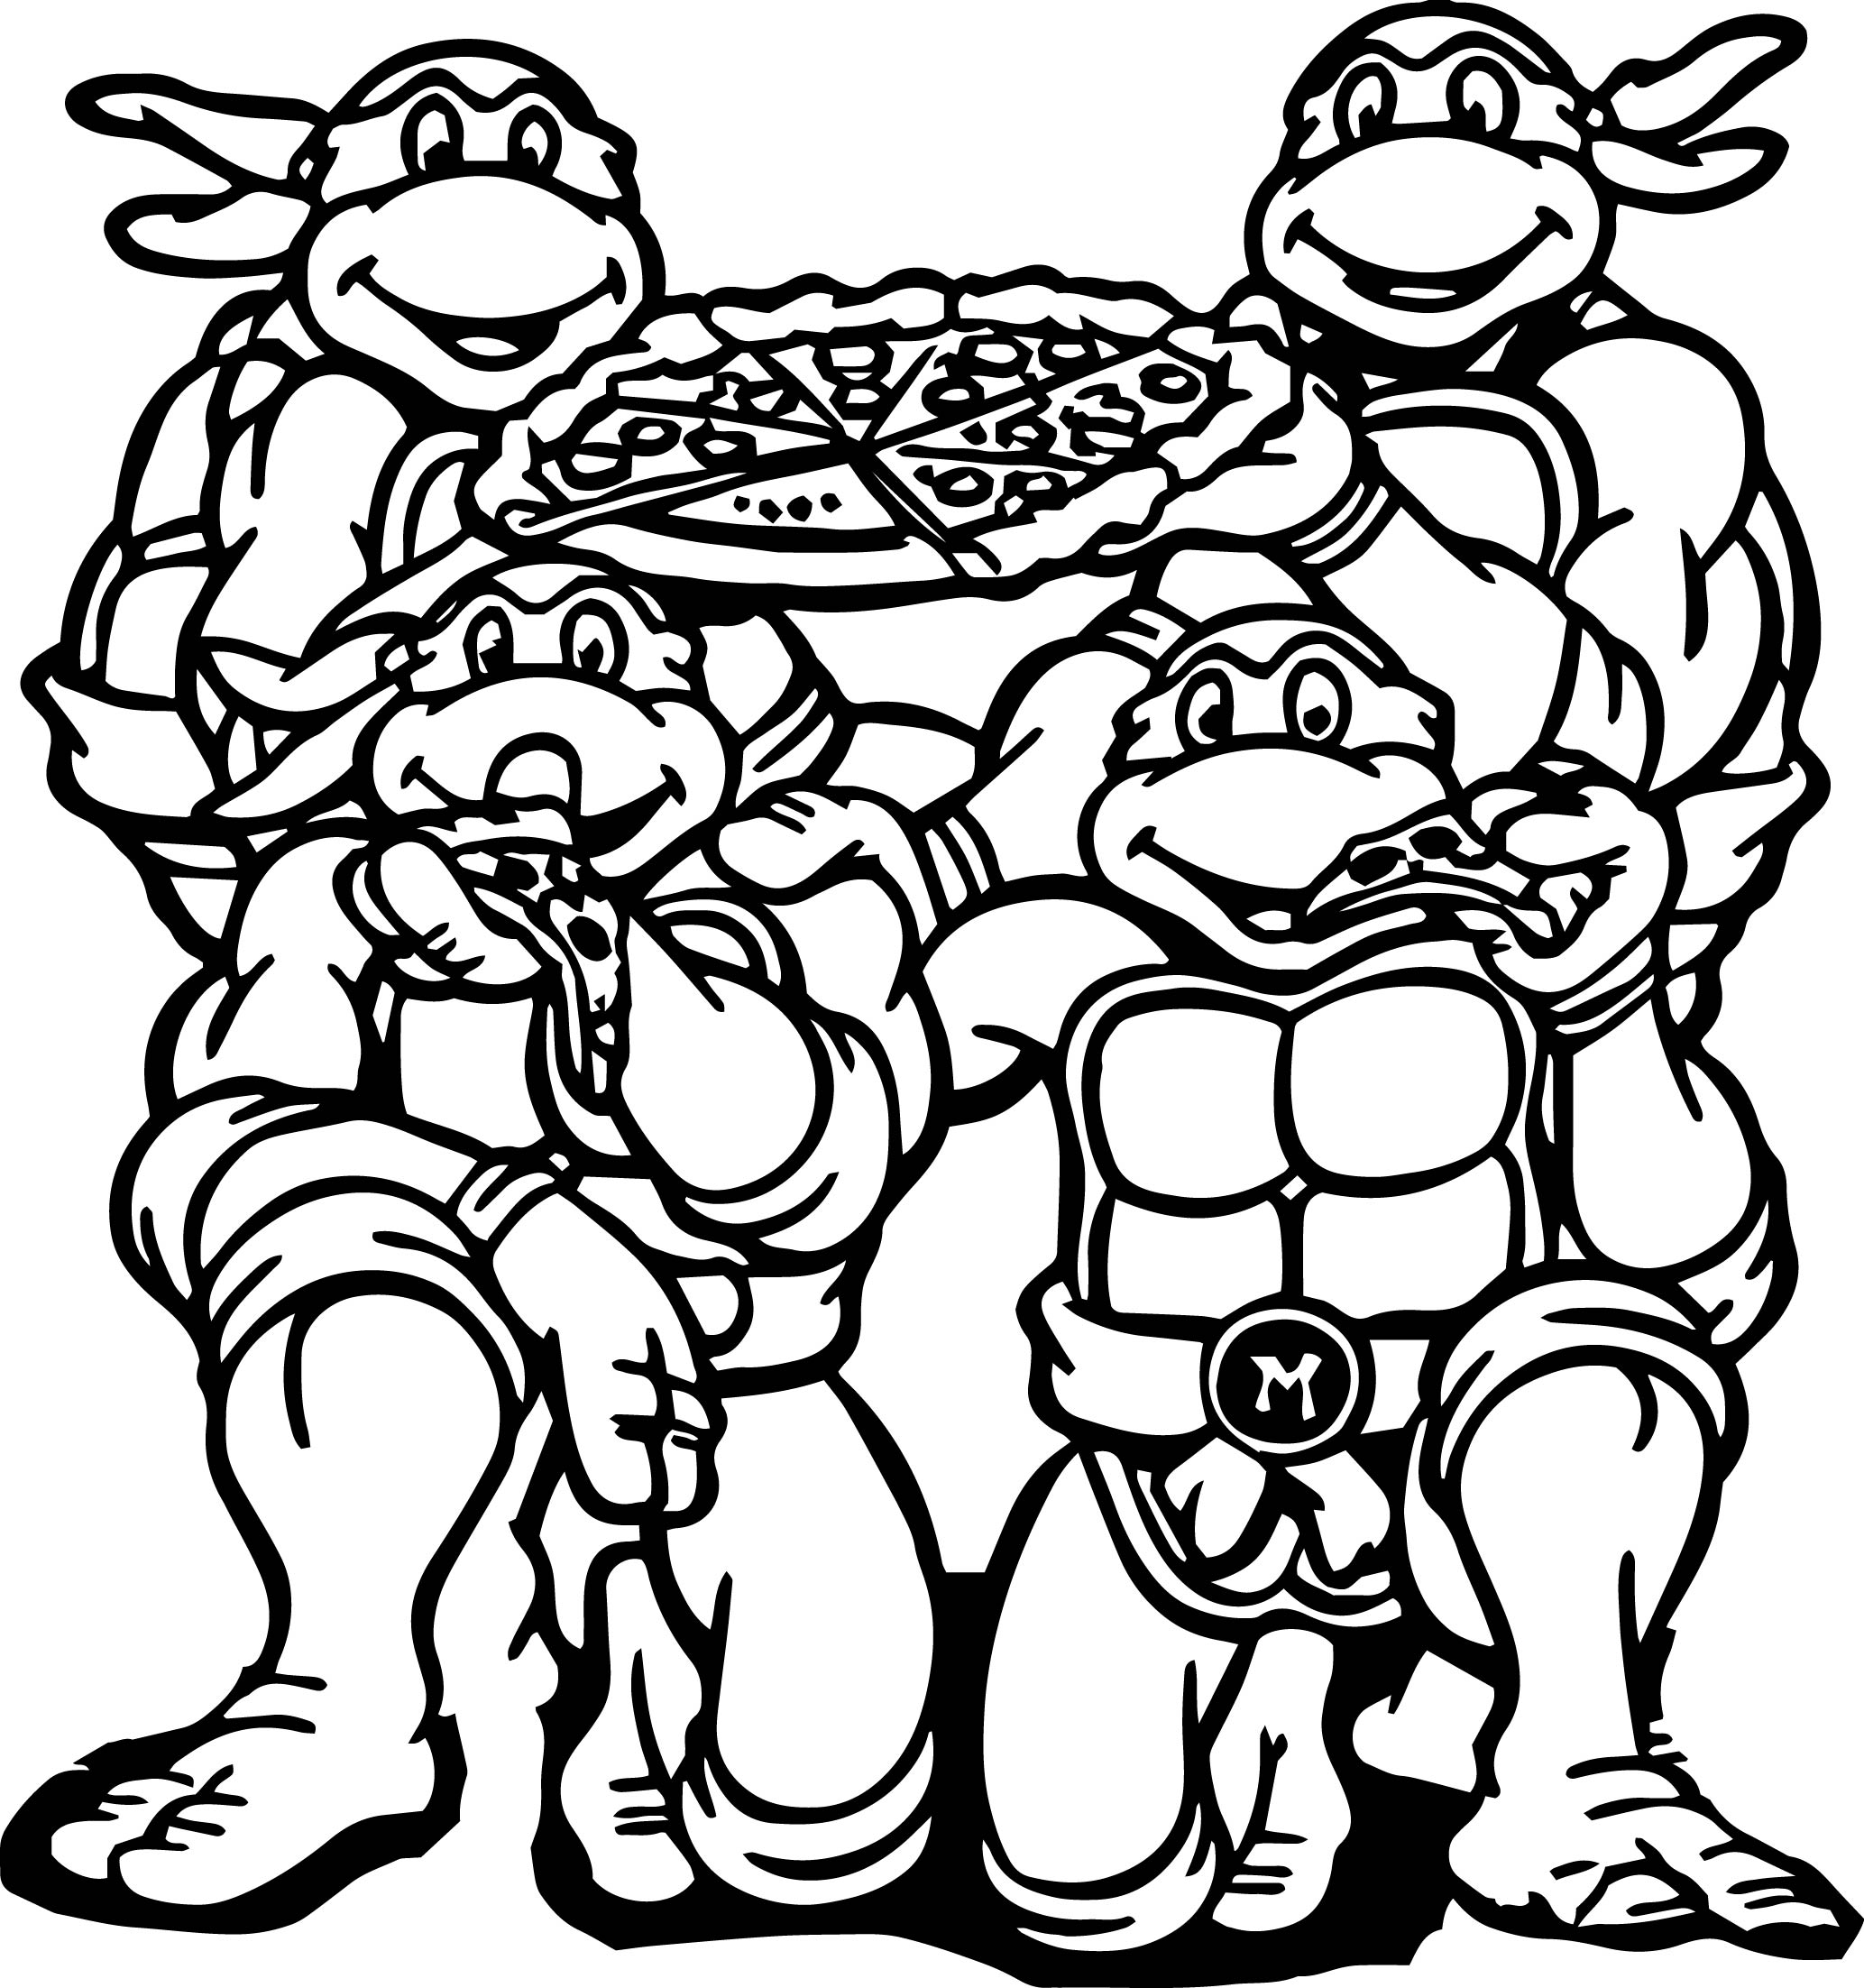 namen ninja turtles coloring pages - photo #4